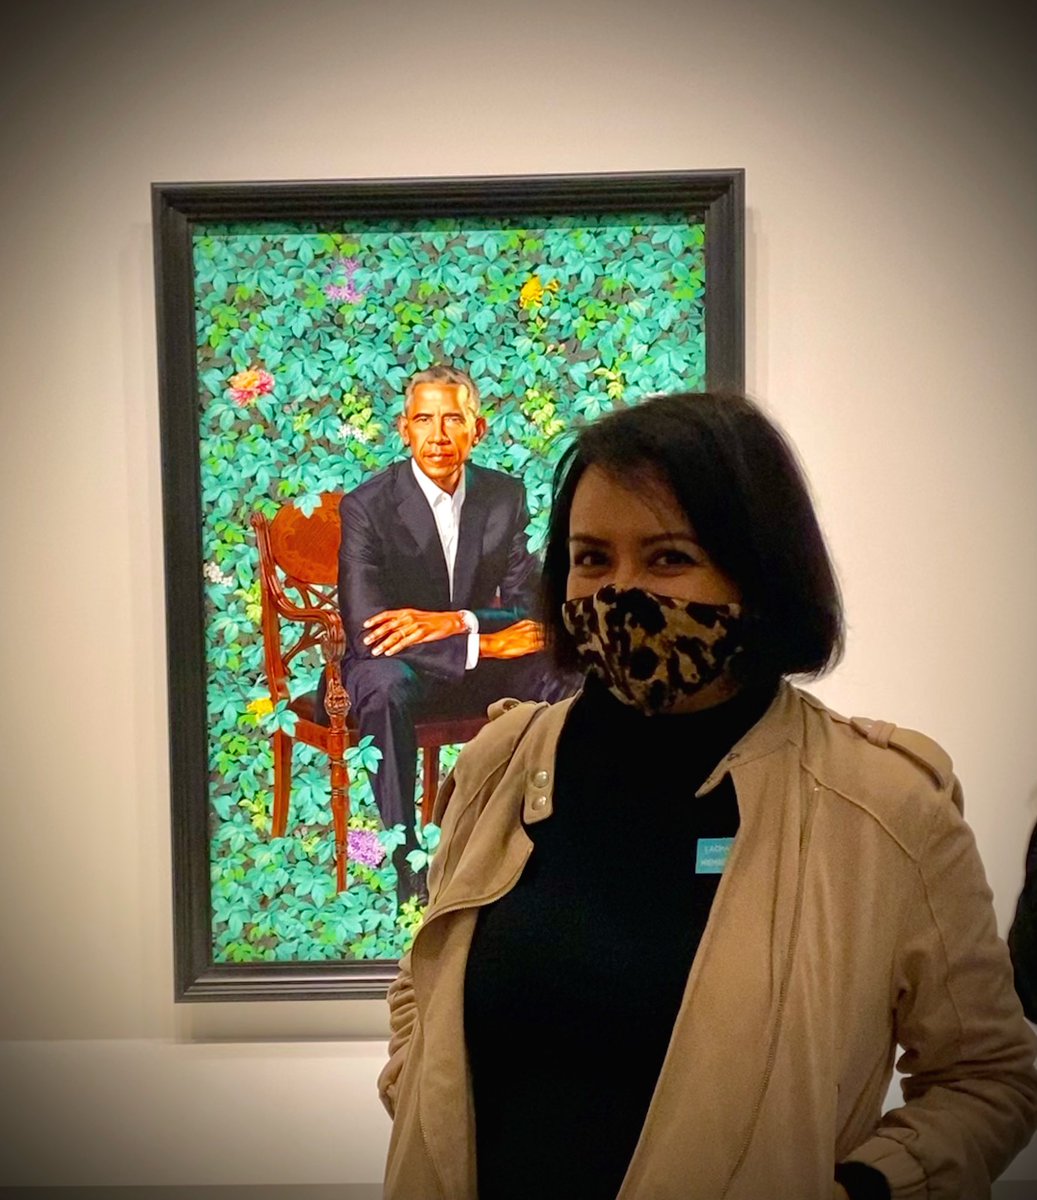 #selfieswithbarry @BarackObama #44       
@LACMA 

#mypresident #theobamaportraits